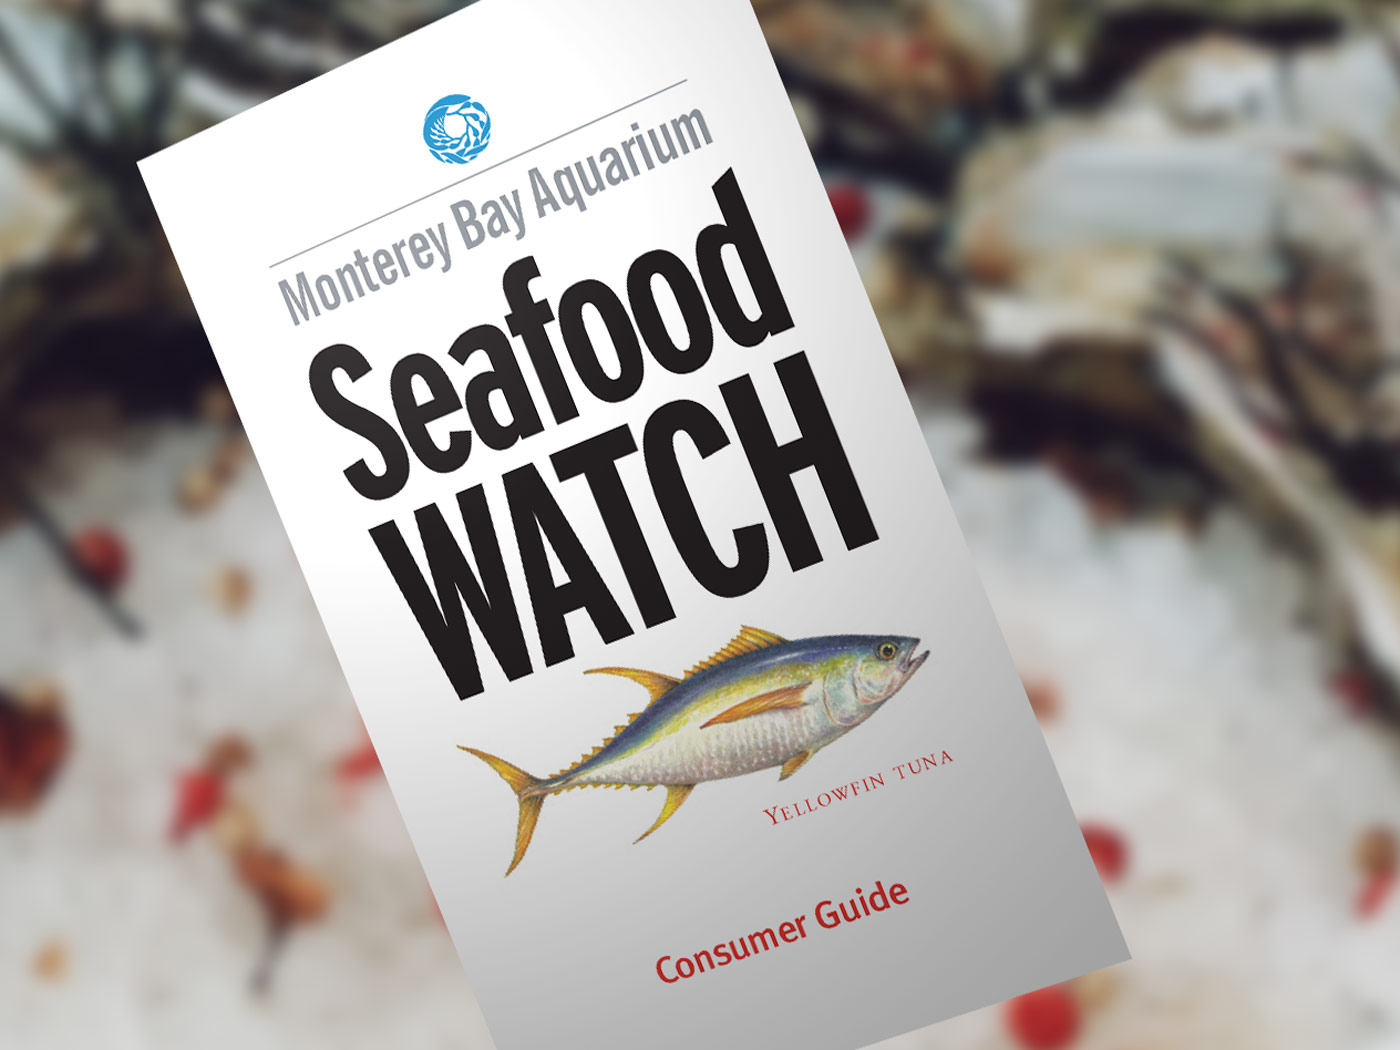 Seafood Watch | SEA LIFE Aquarium